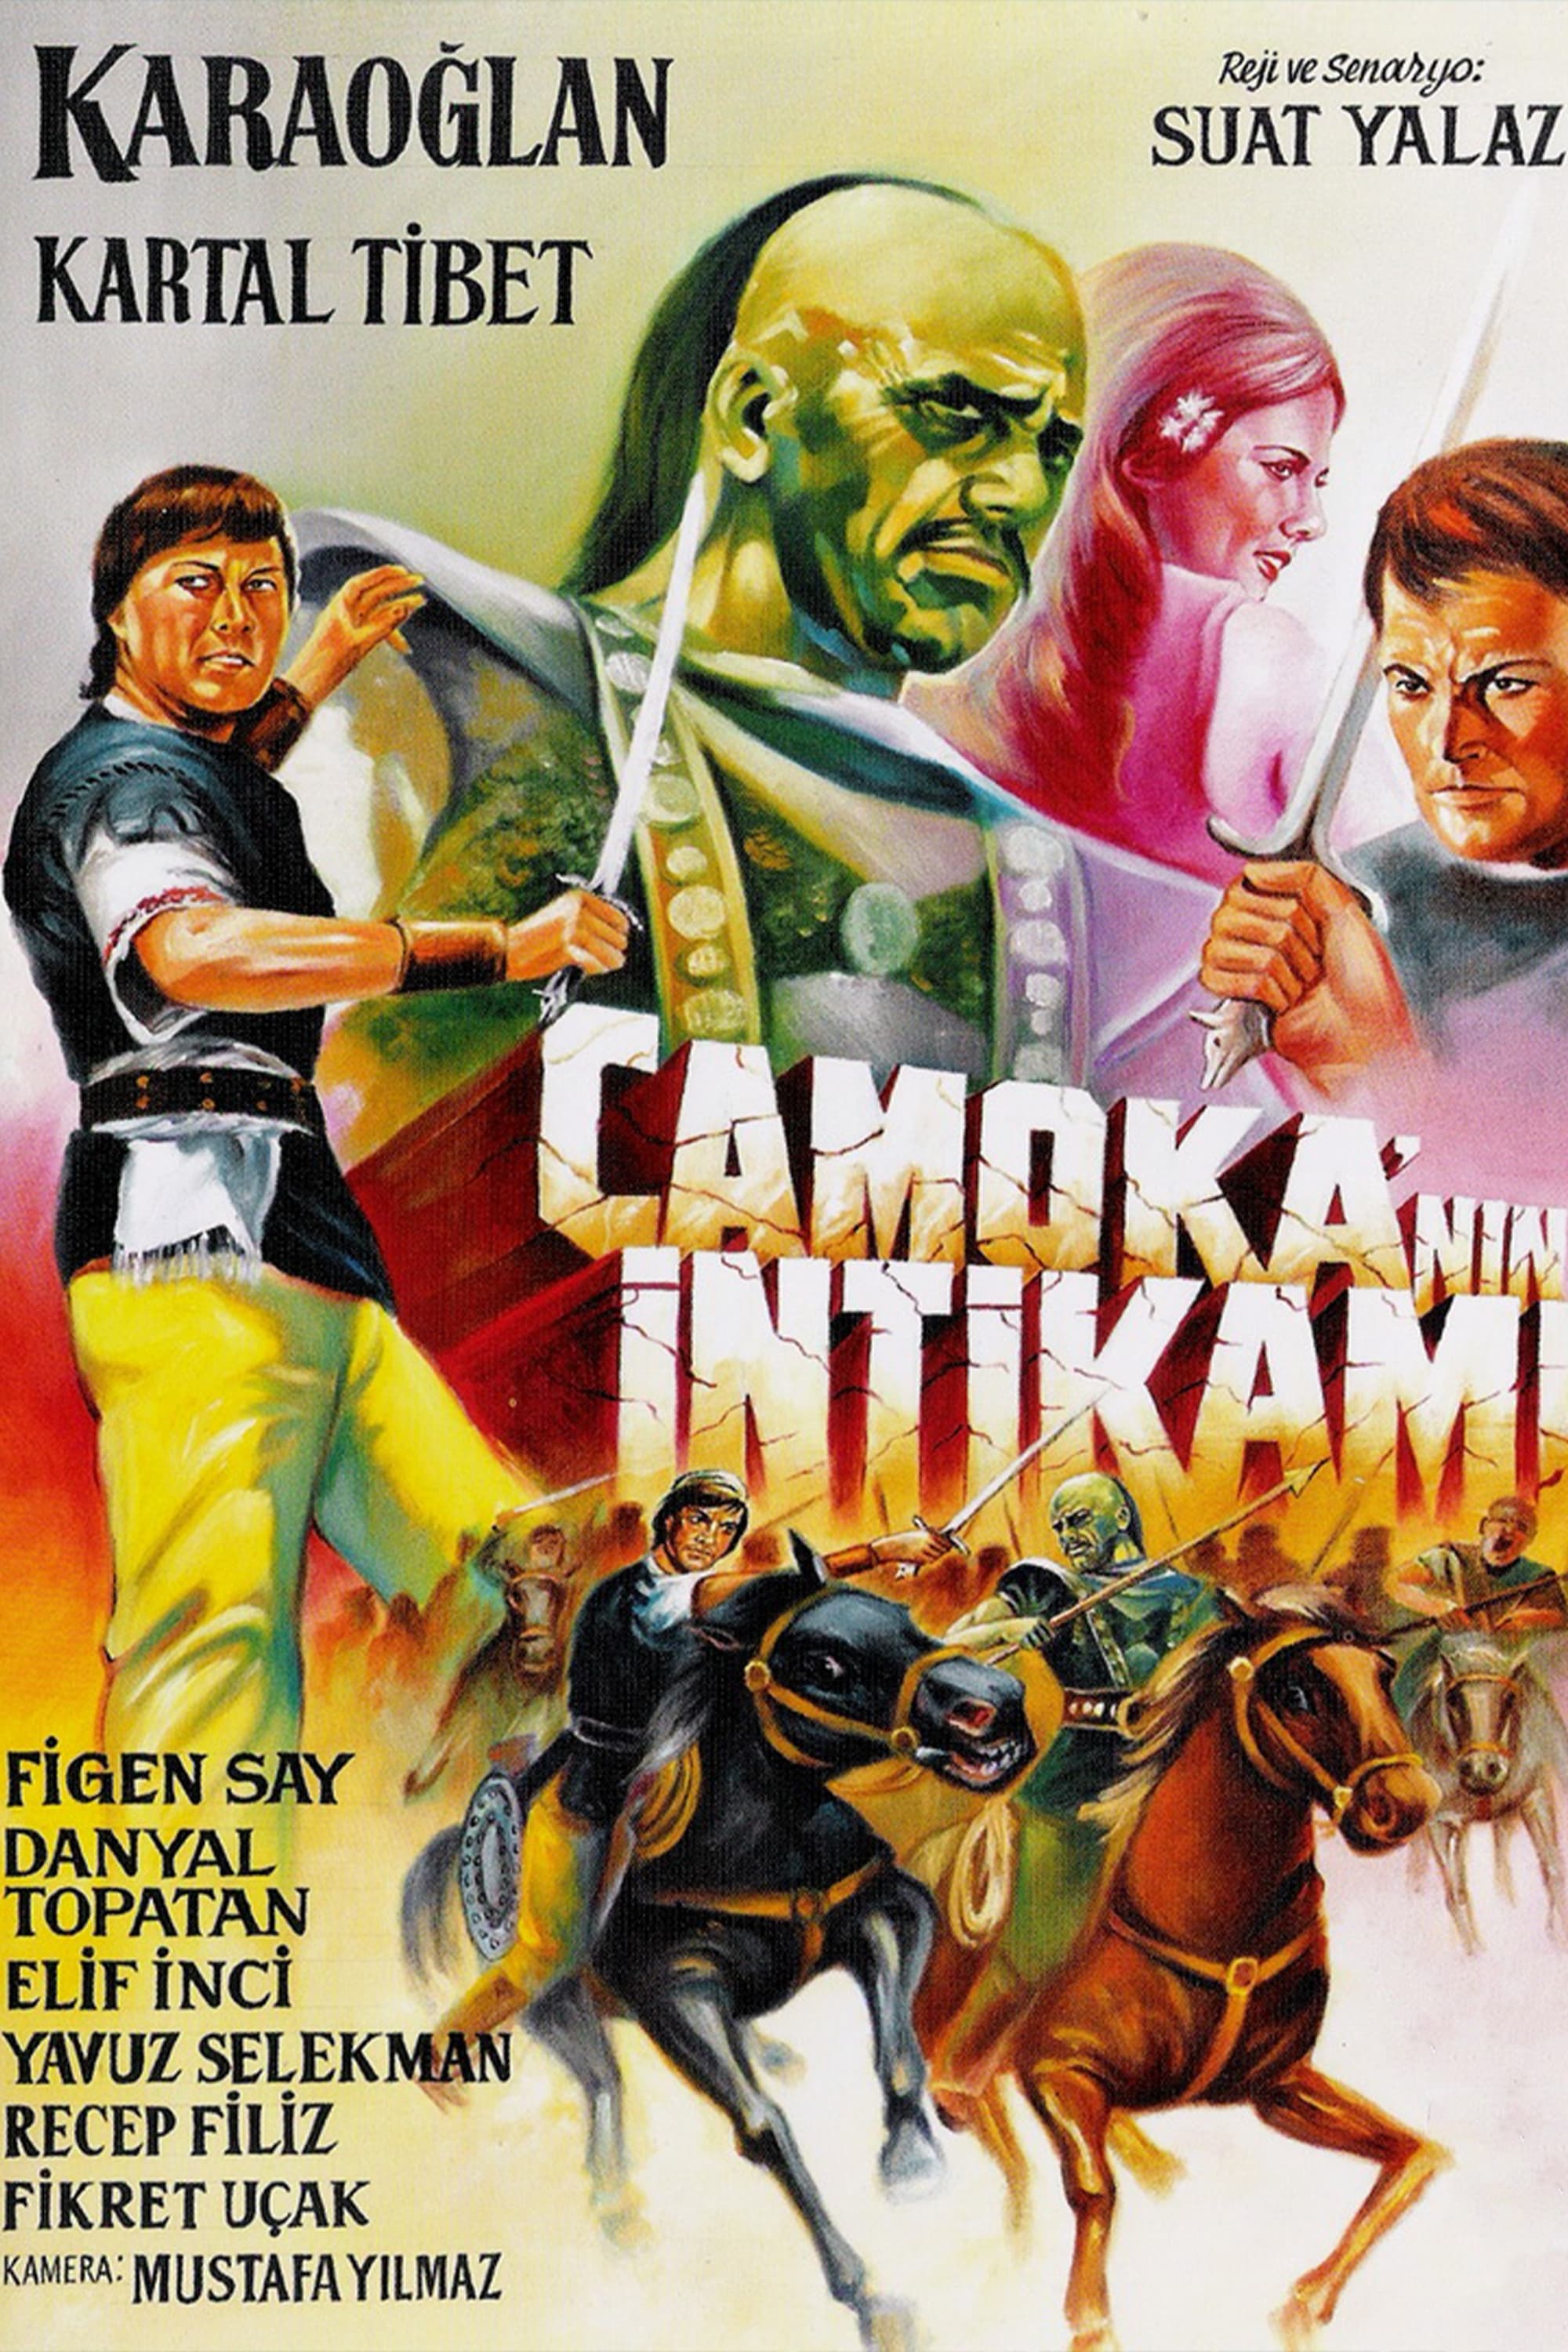 Karaoglan: Camoka's Revenge